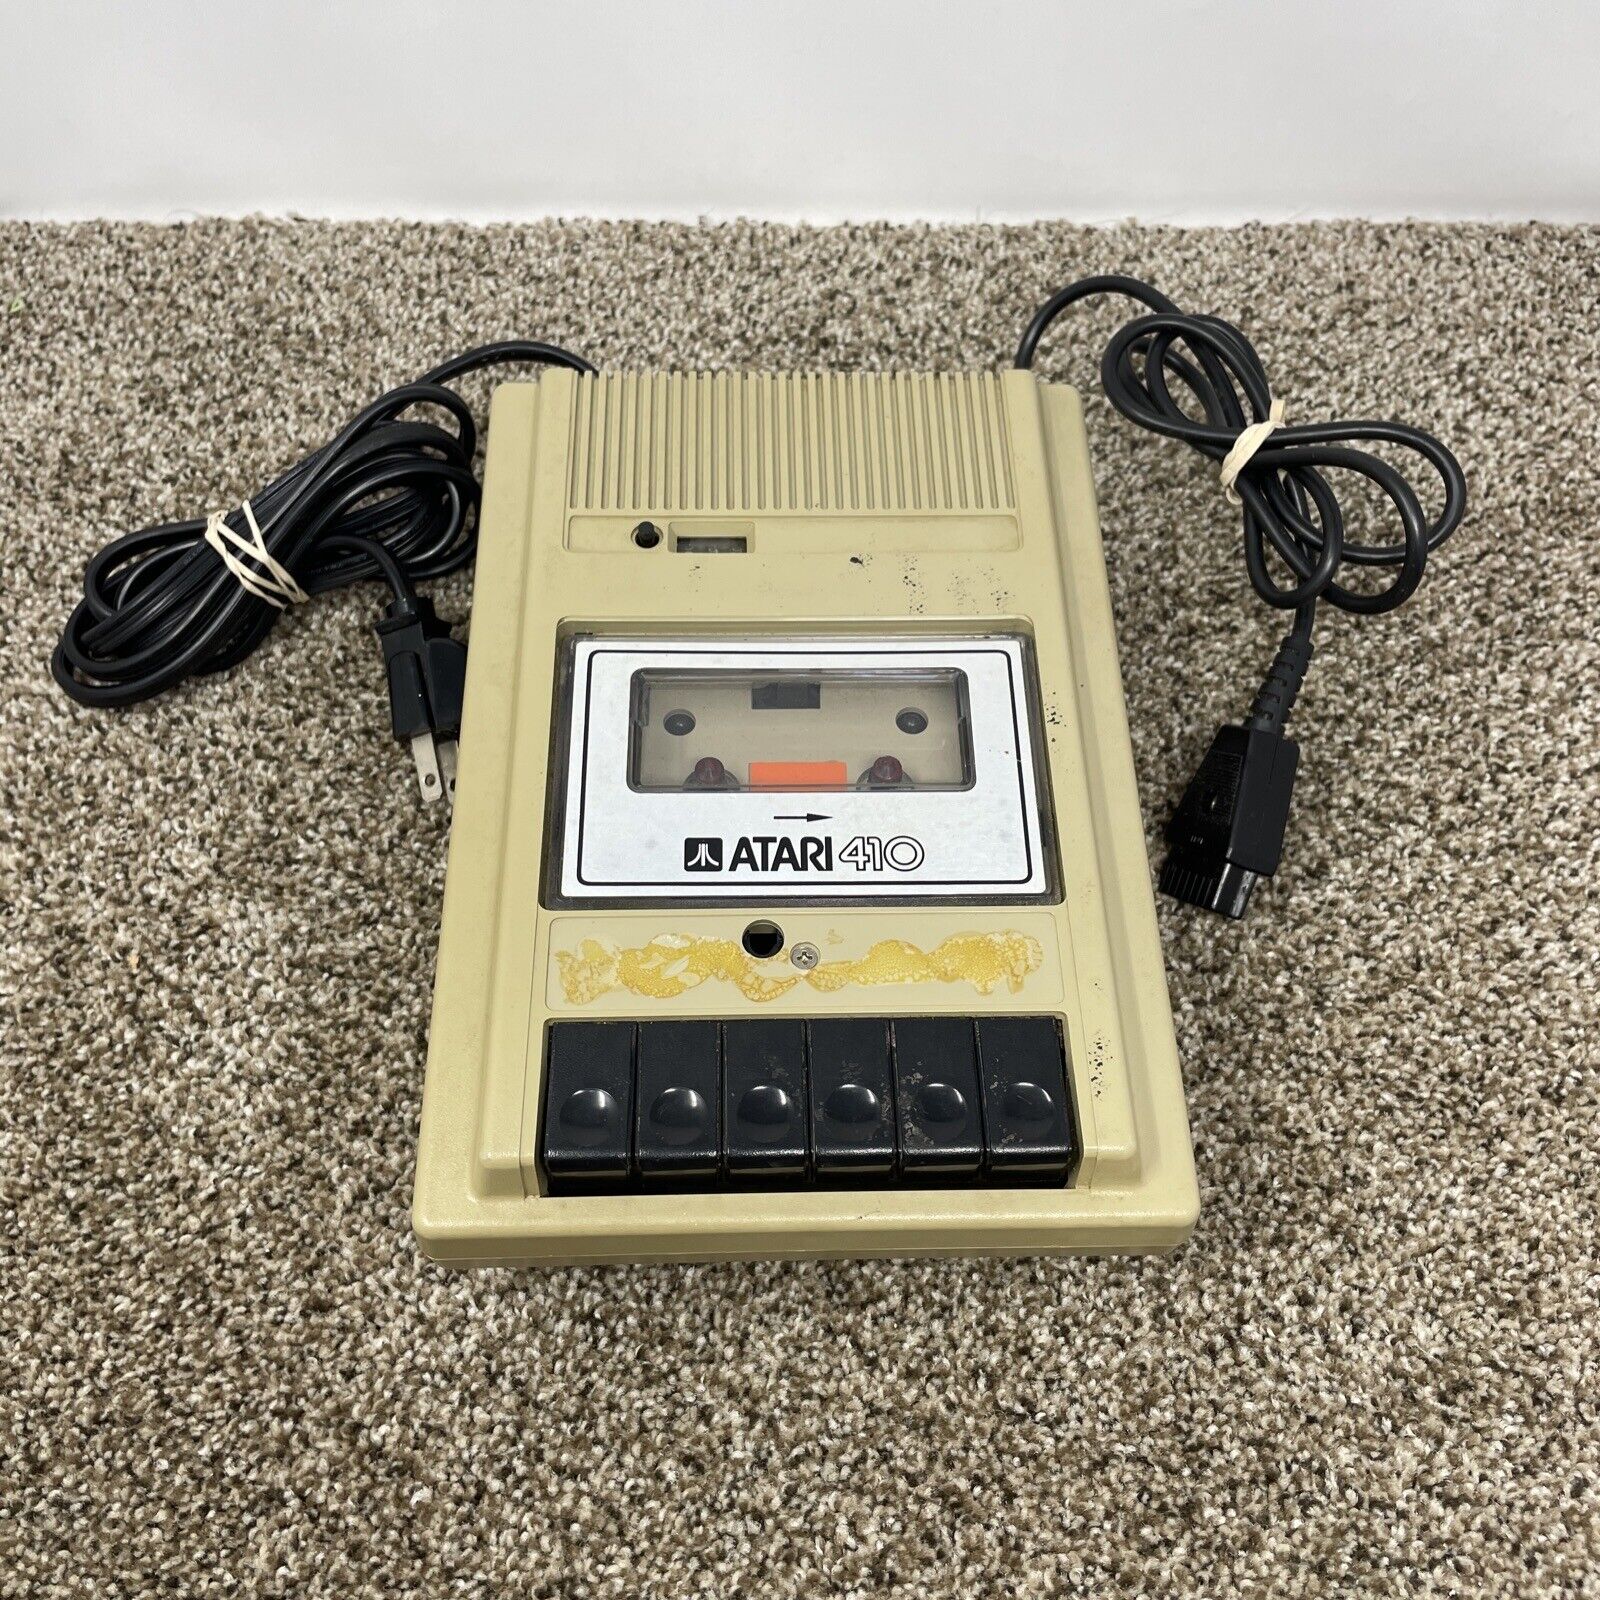 Atari 410 Program Recorder - Untested AS IS